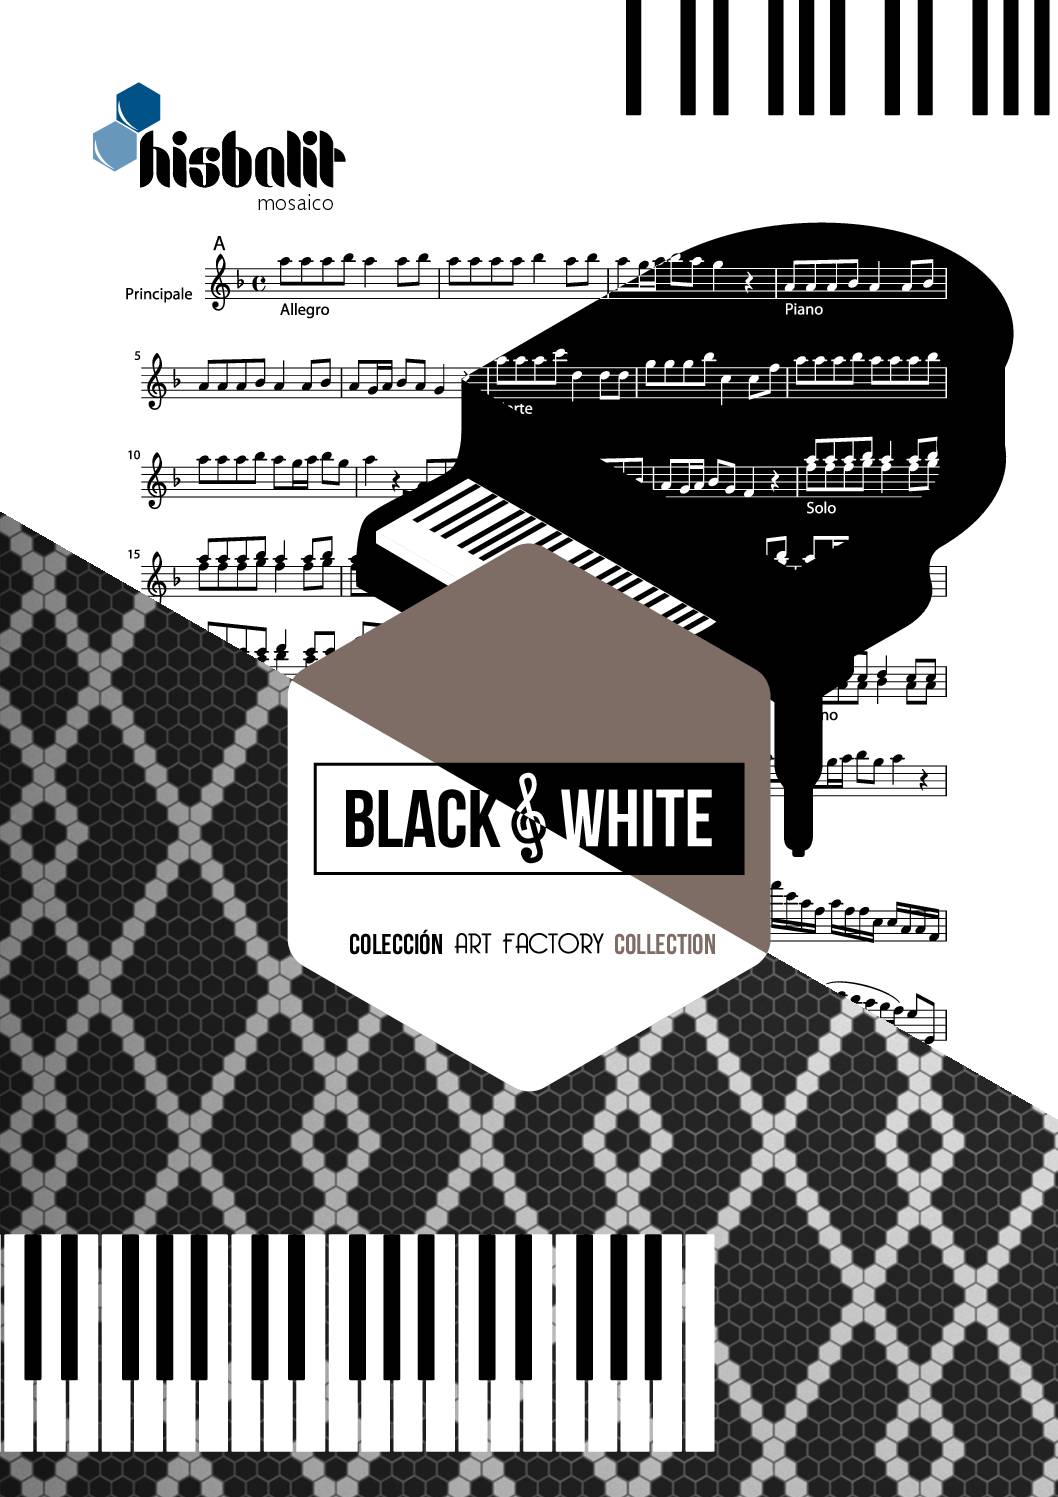 Hisbalit Catalogue Black & White